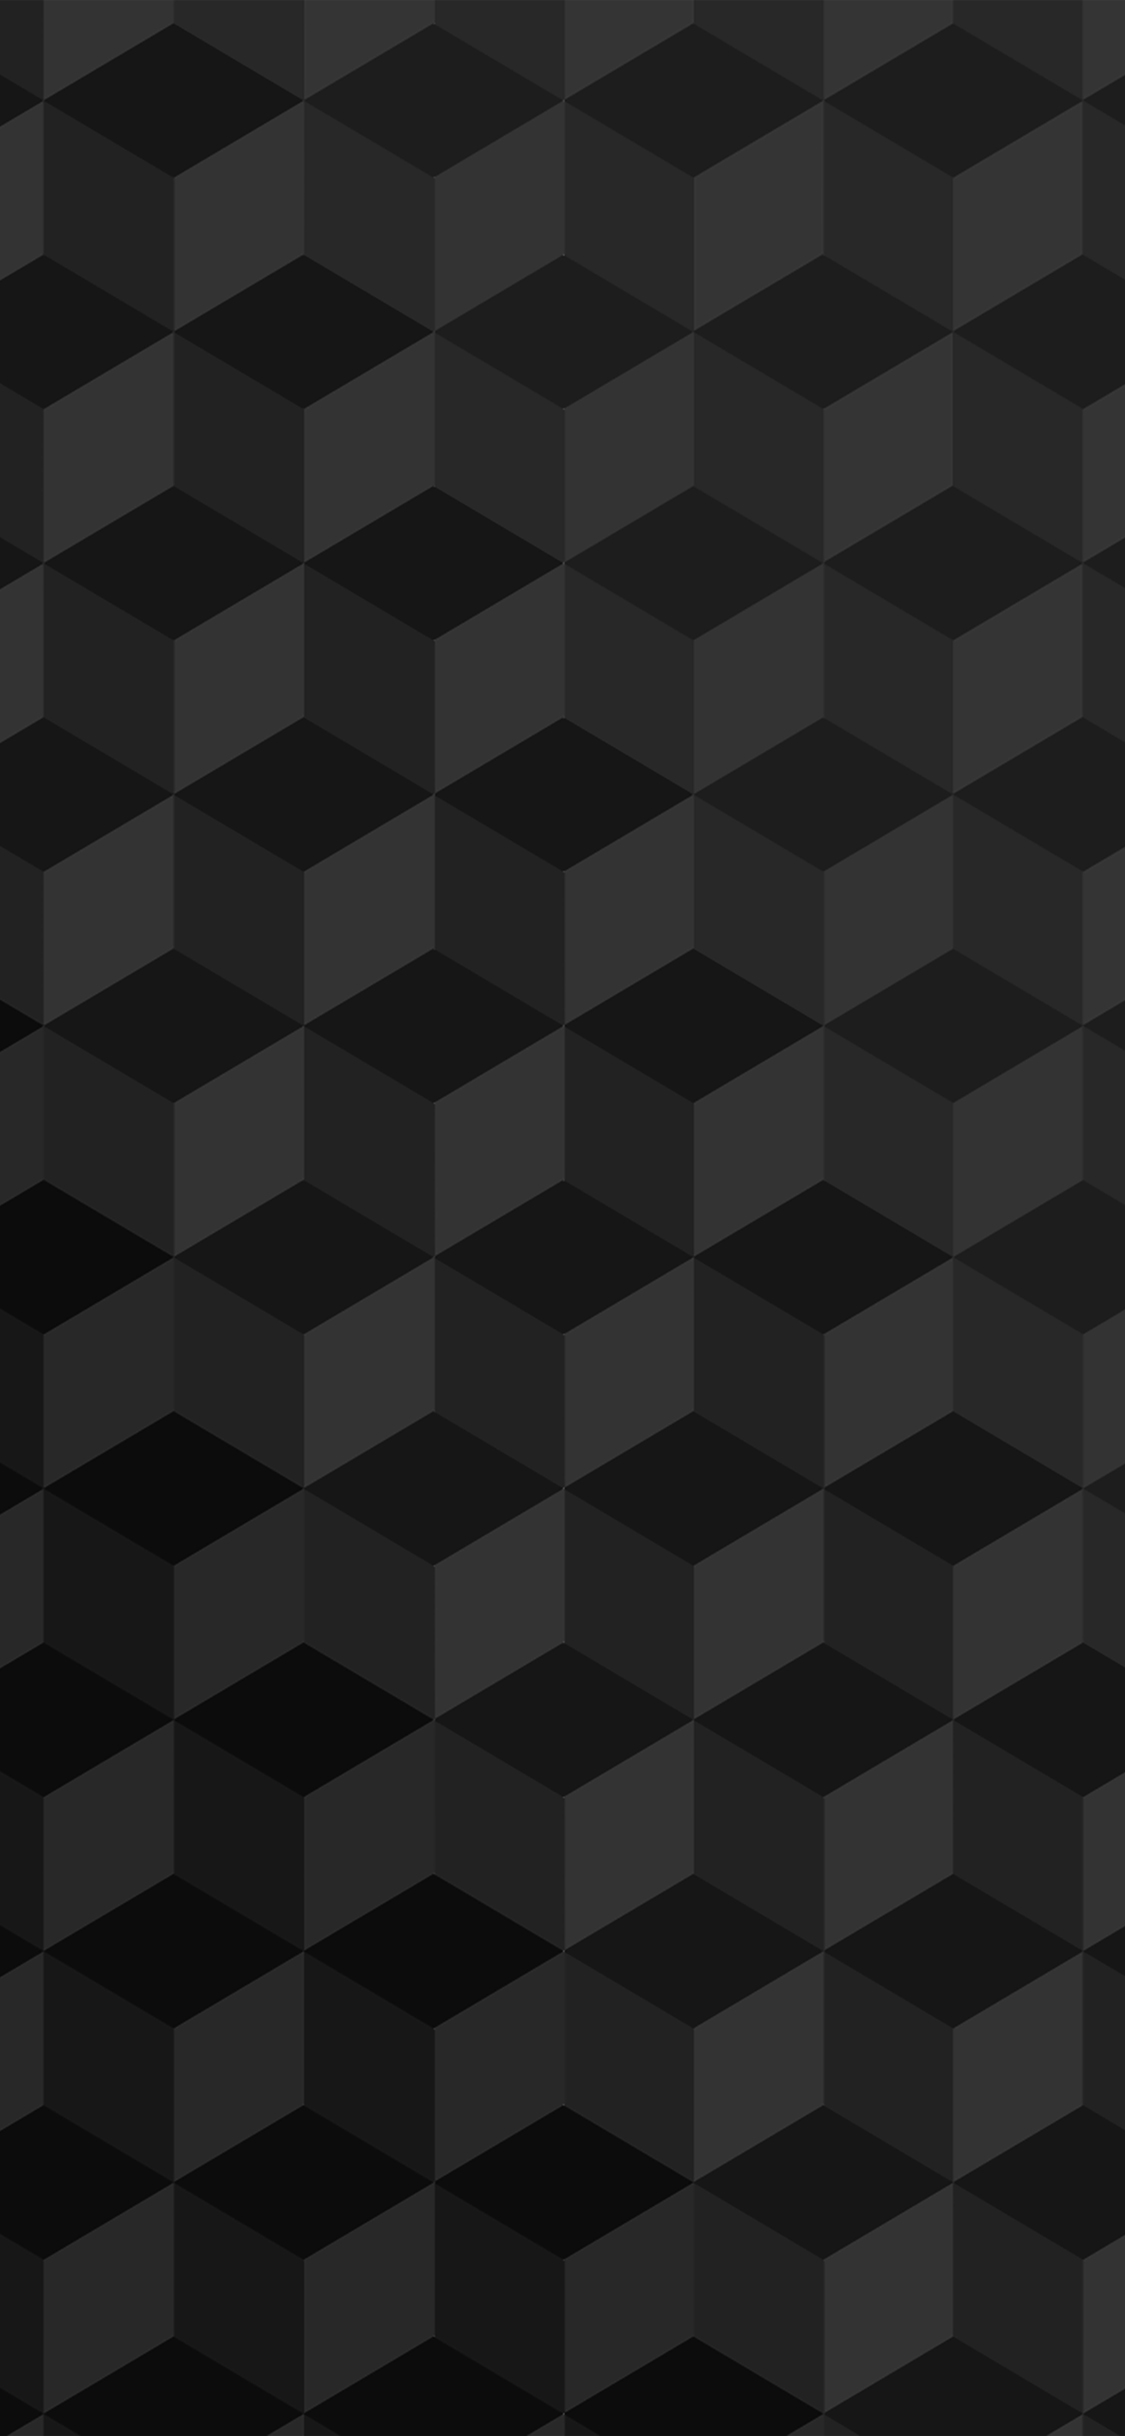 iPhone wallpaper. polygon dark bw art graphic pattern